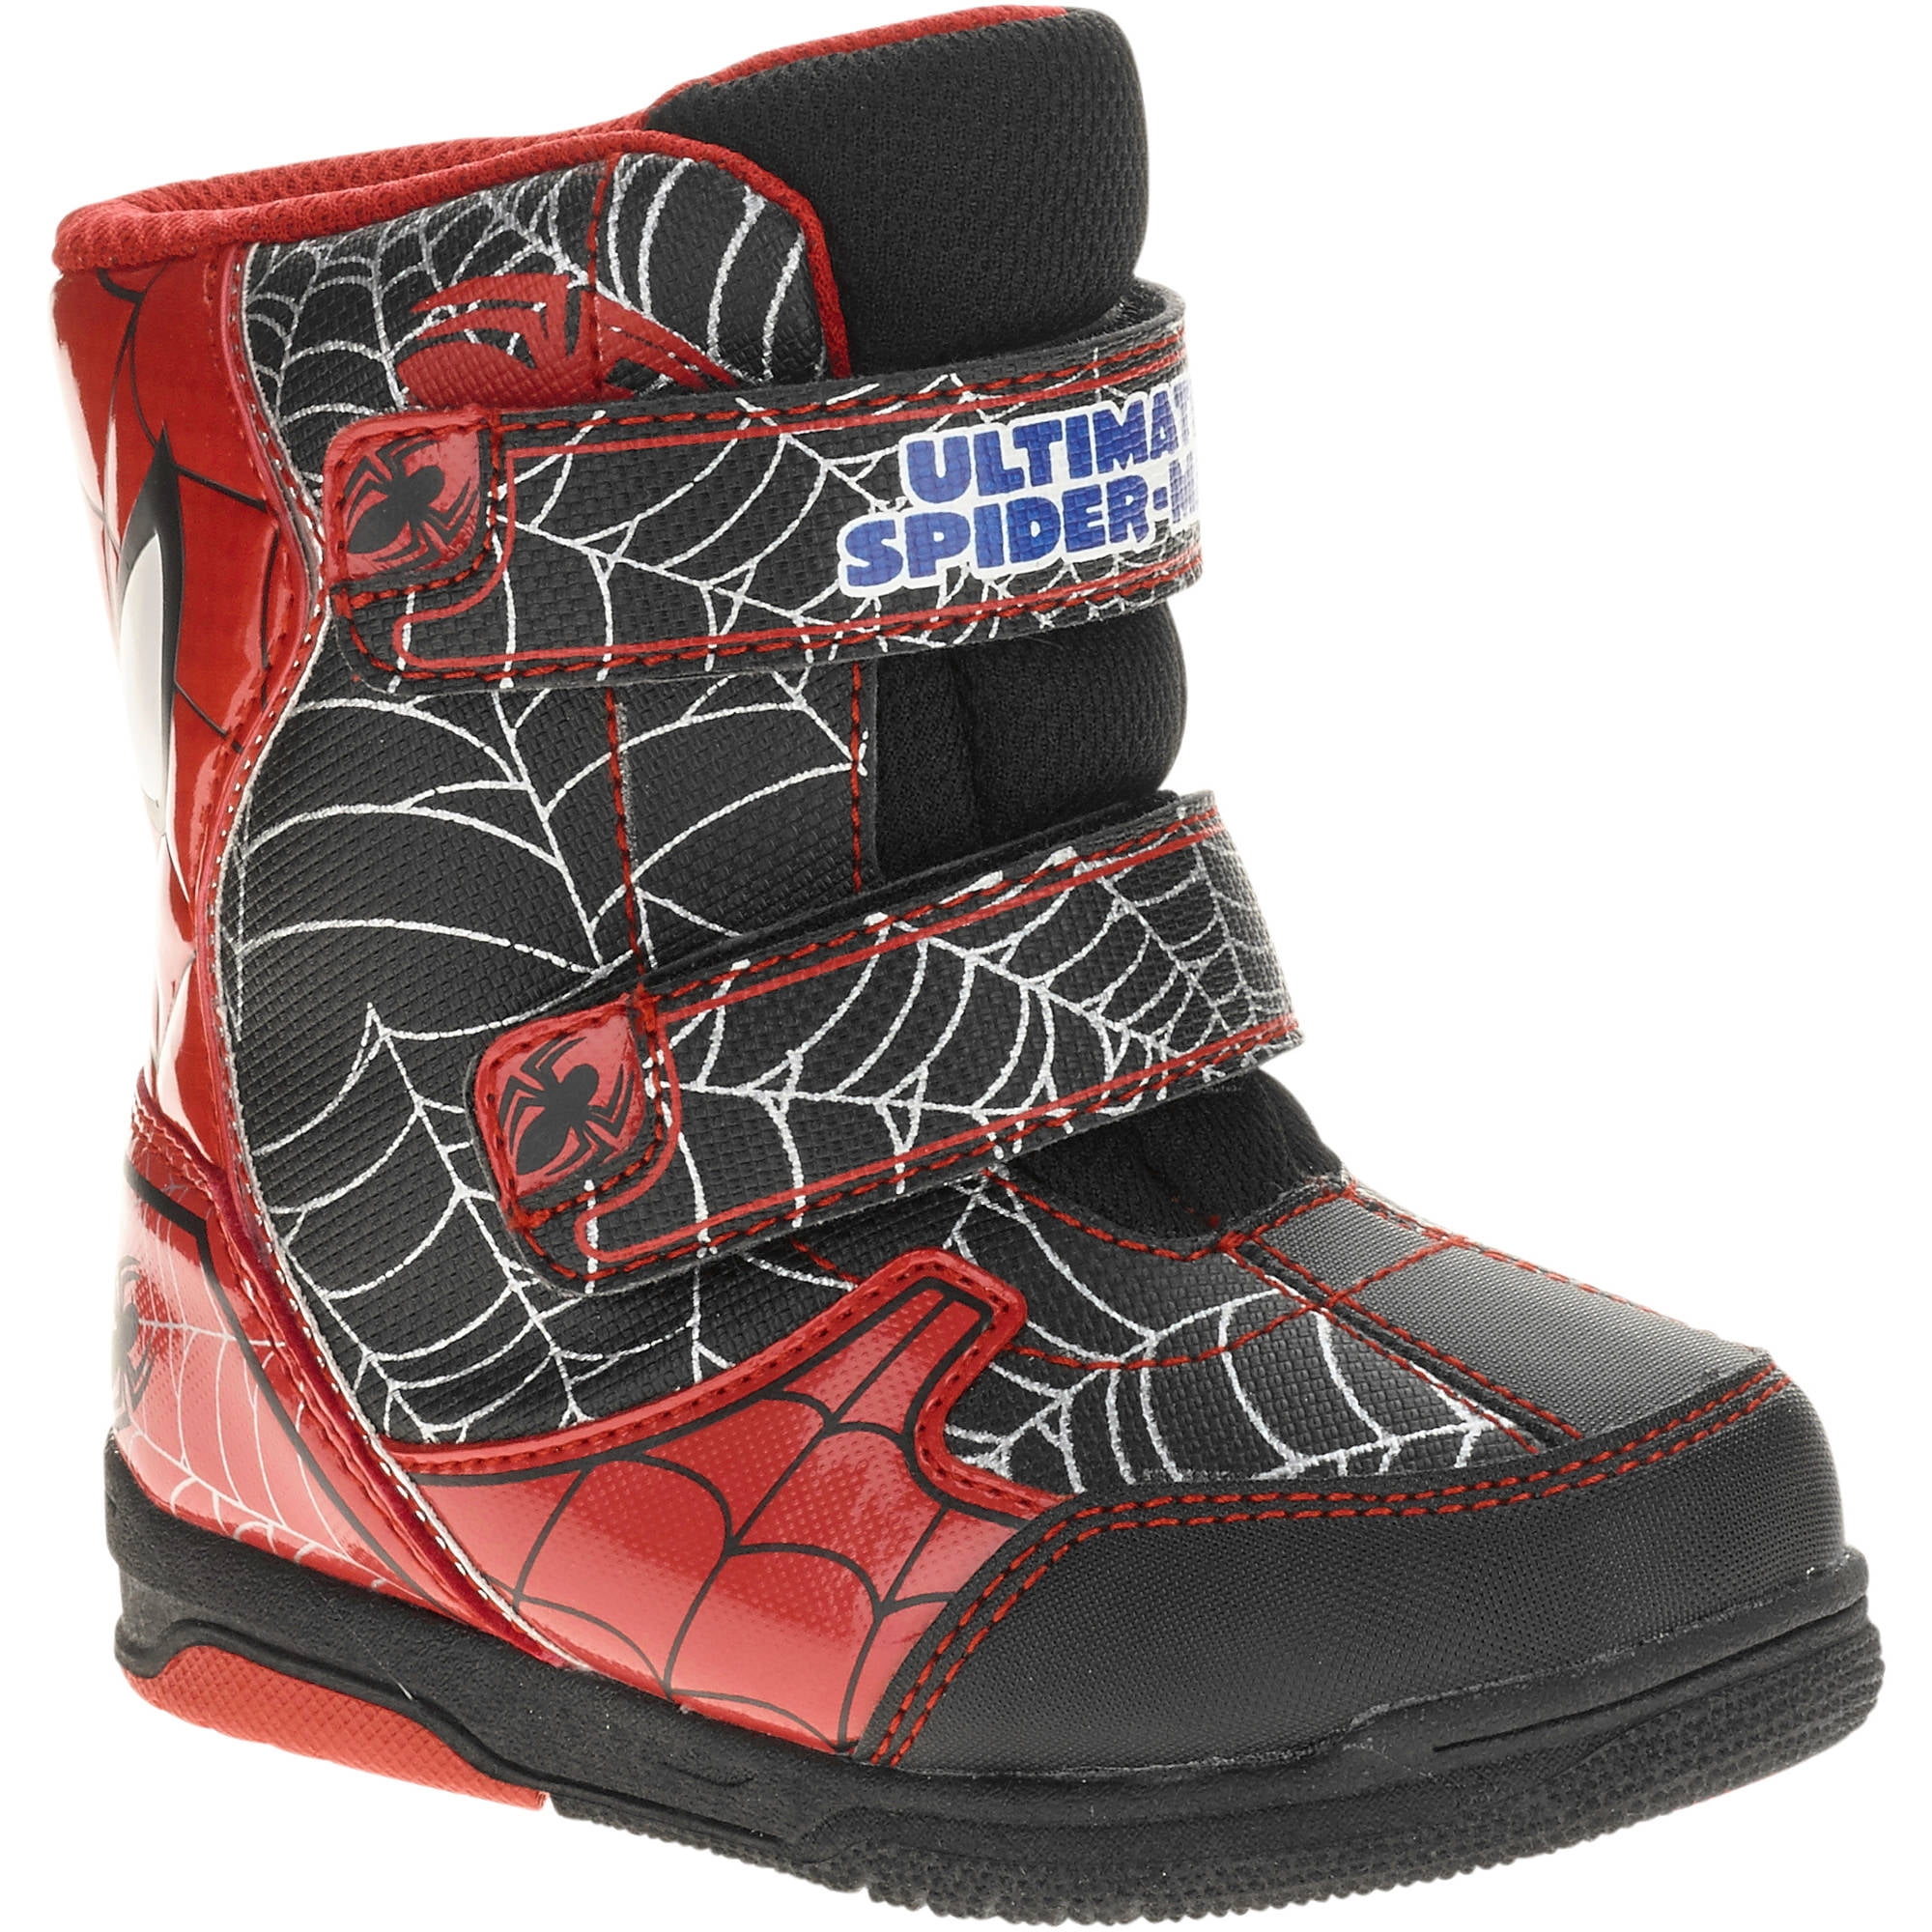 Spiderman Toddler Boy's Winter Boot - Walmart.com